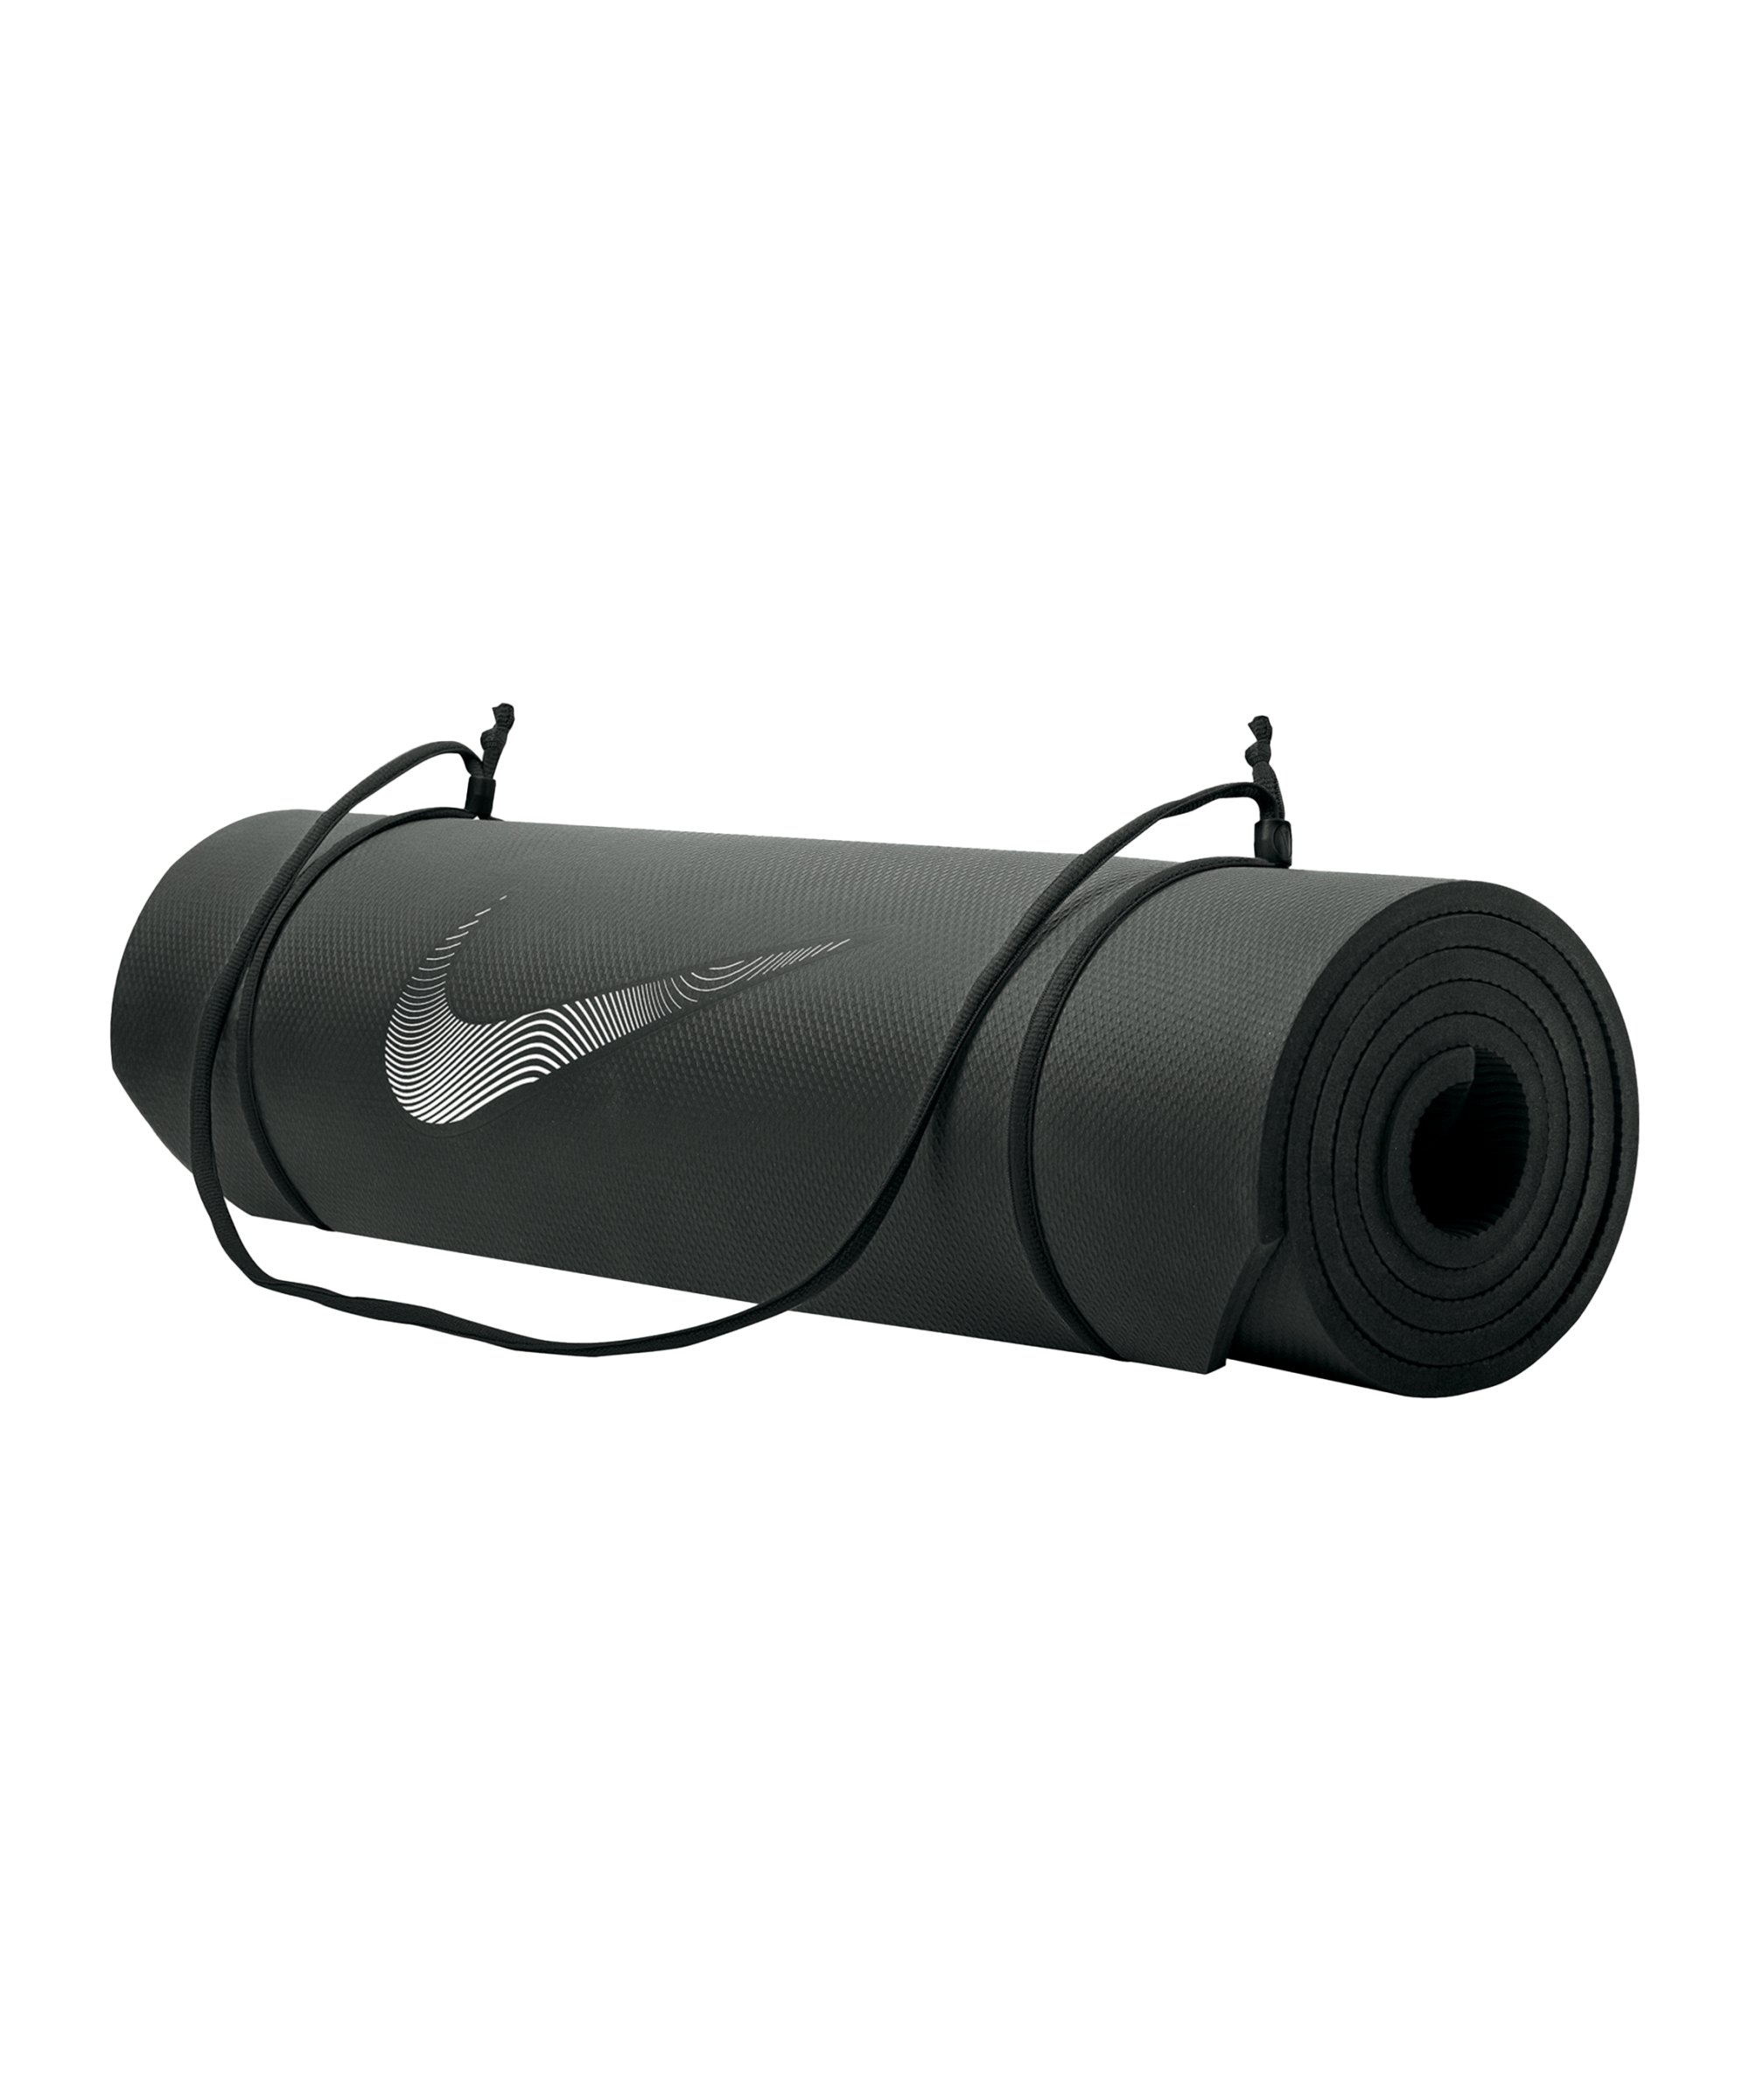 Nike 2.0 Trainingsmatte Schwarz Weiss F010 - schwarz